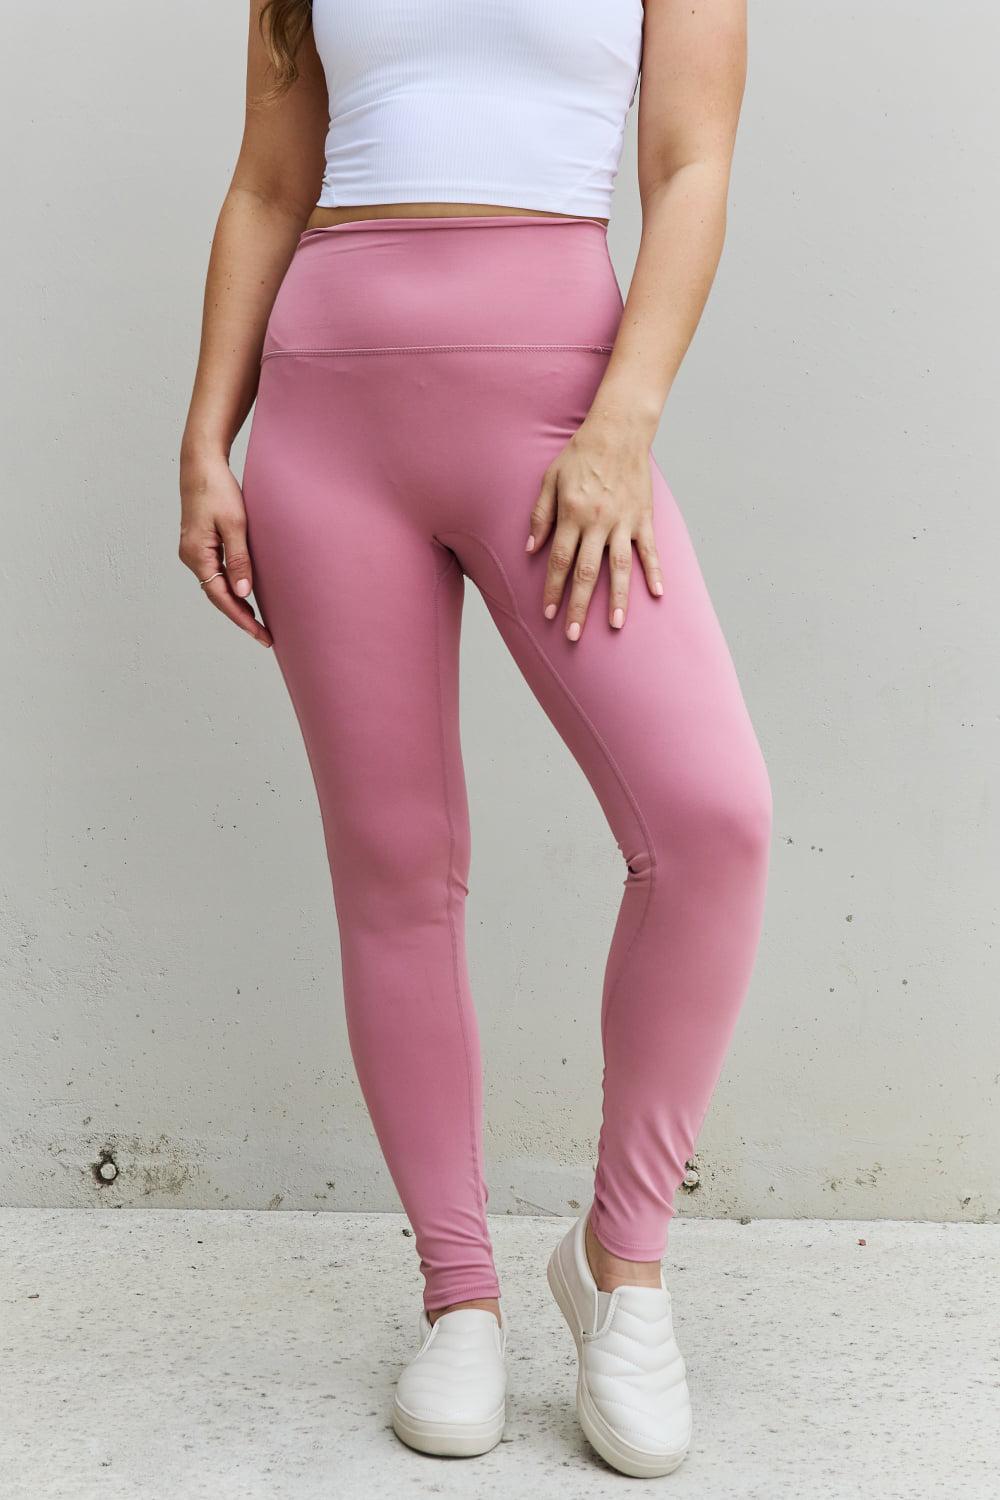 Zenana Fit For You Full Size High Waist Active Leggings in Light Rose BLUE ZONE PLANET